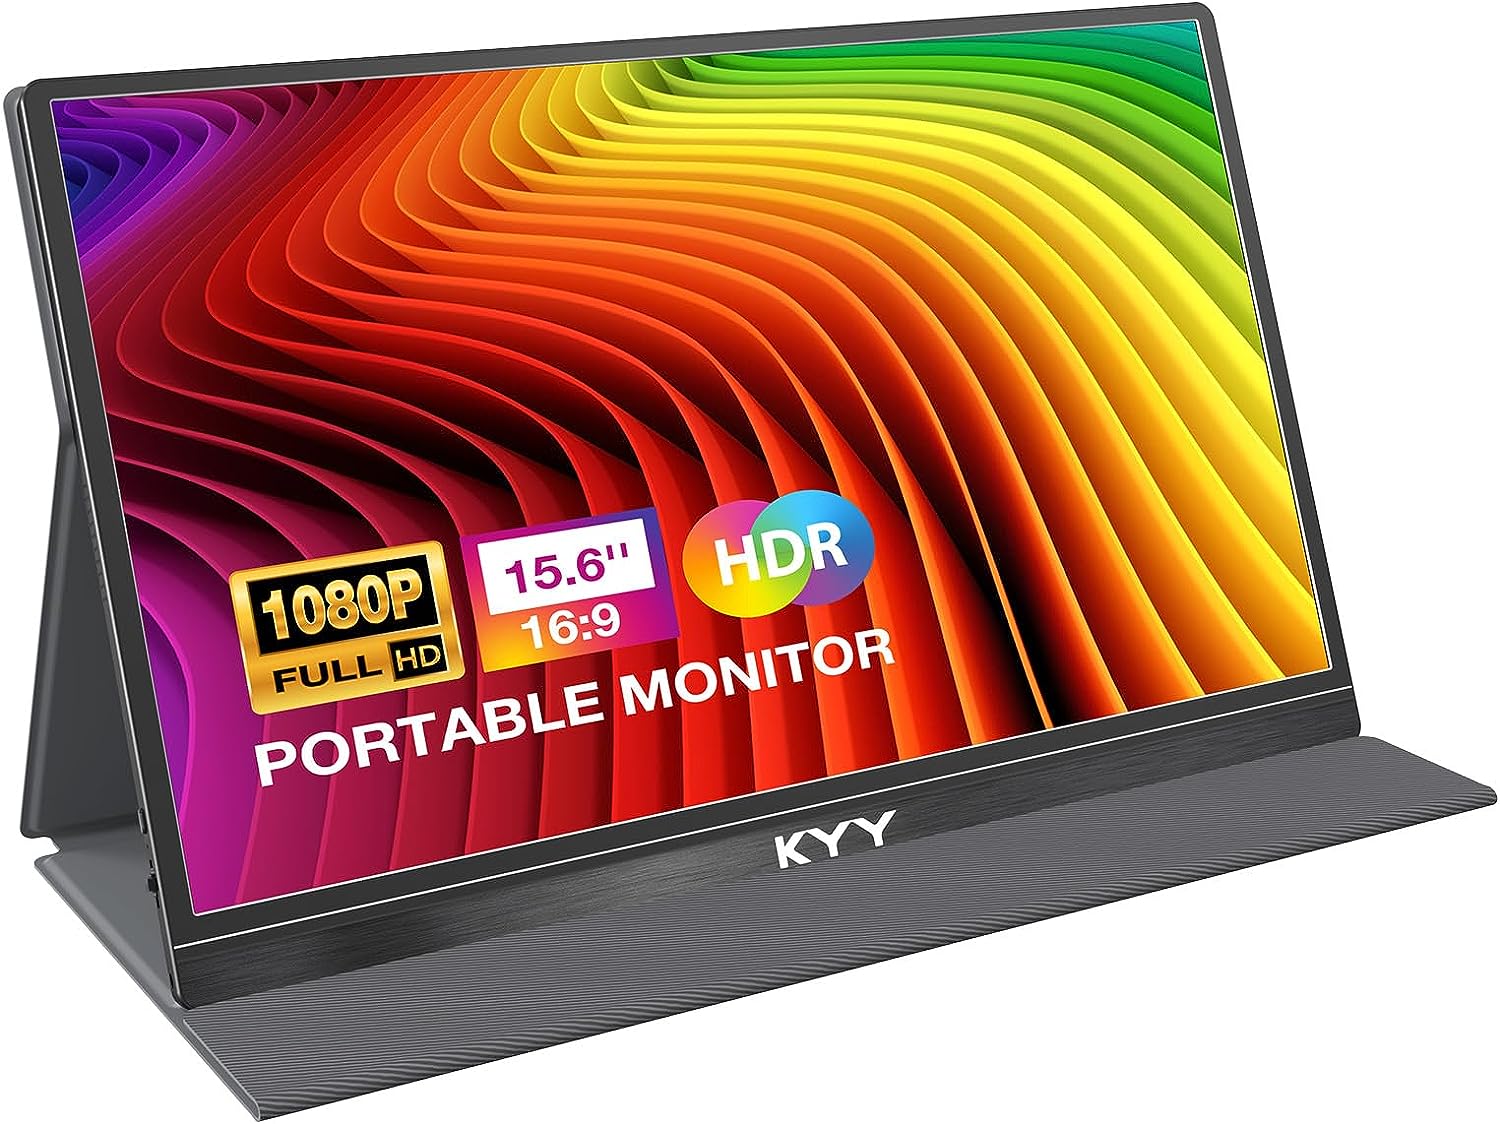 Portable Monitor - KYY 15.6'' FHD 1080P Portable [...]